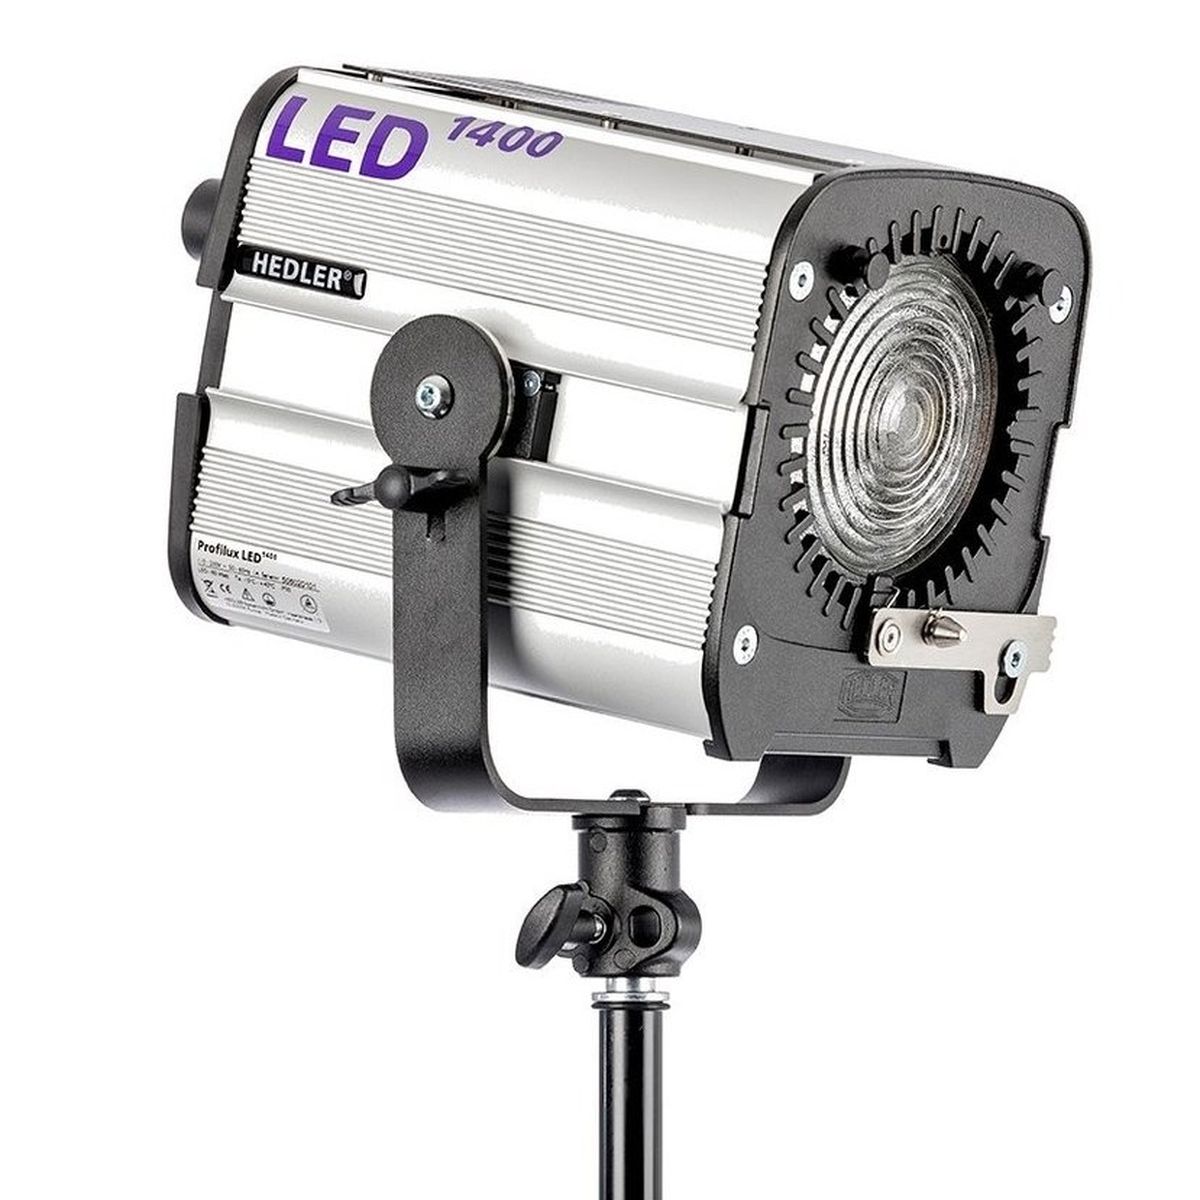 Hedler Profilux LED 1400 (fokussierbar, dimmbar)